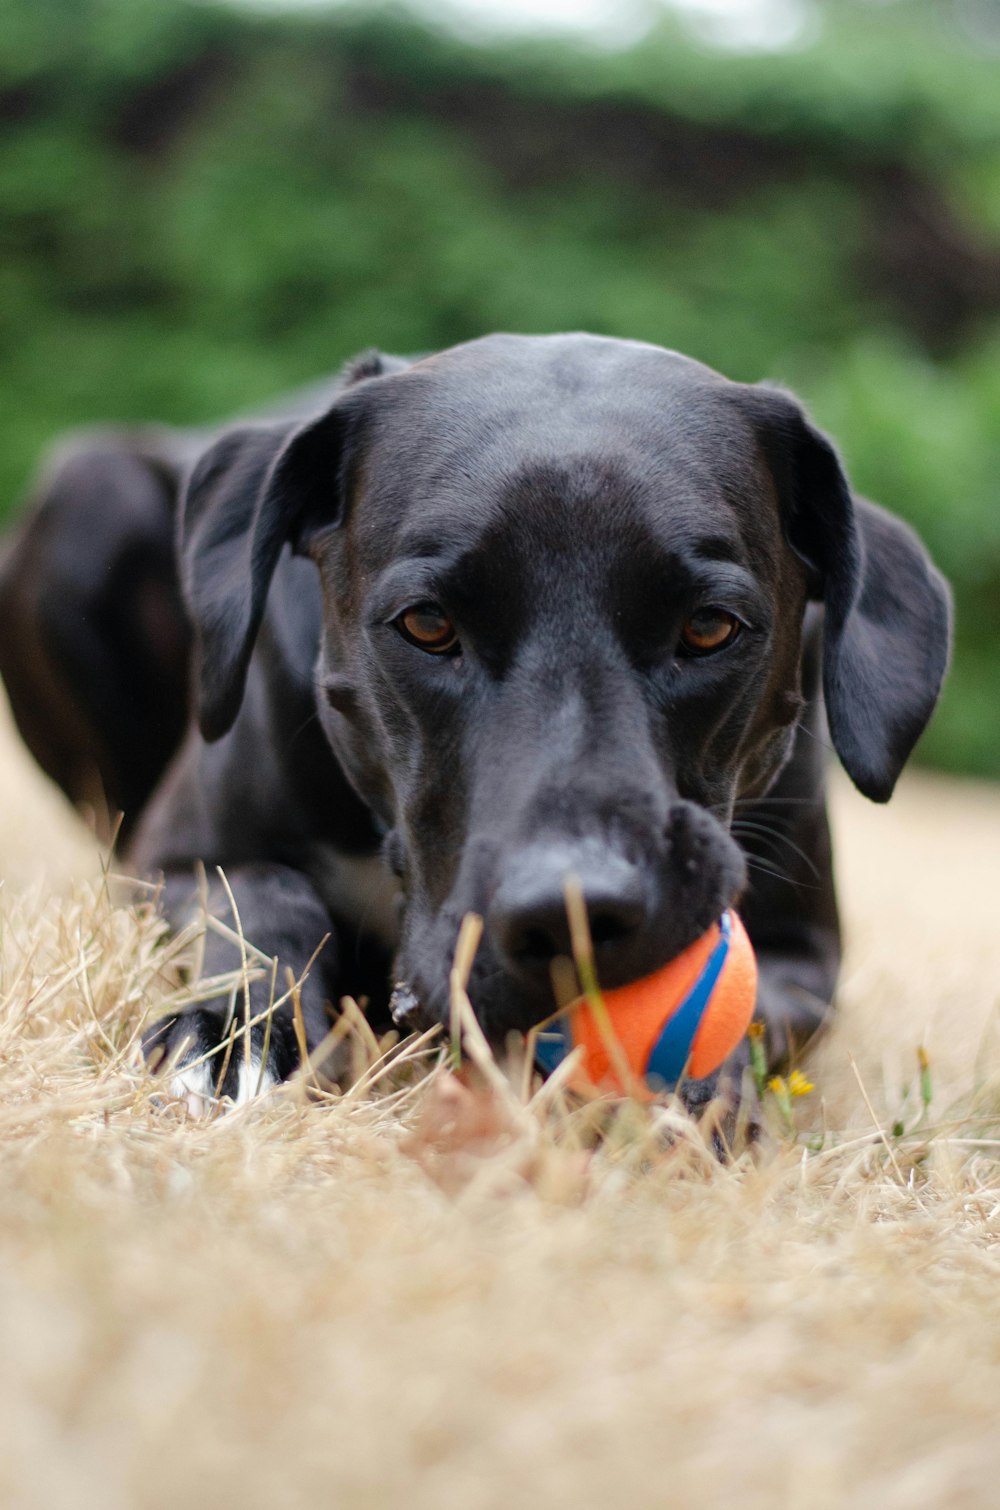 short-coated black dog lying on grass biting ball